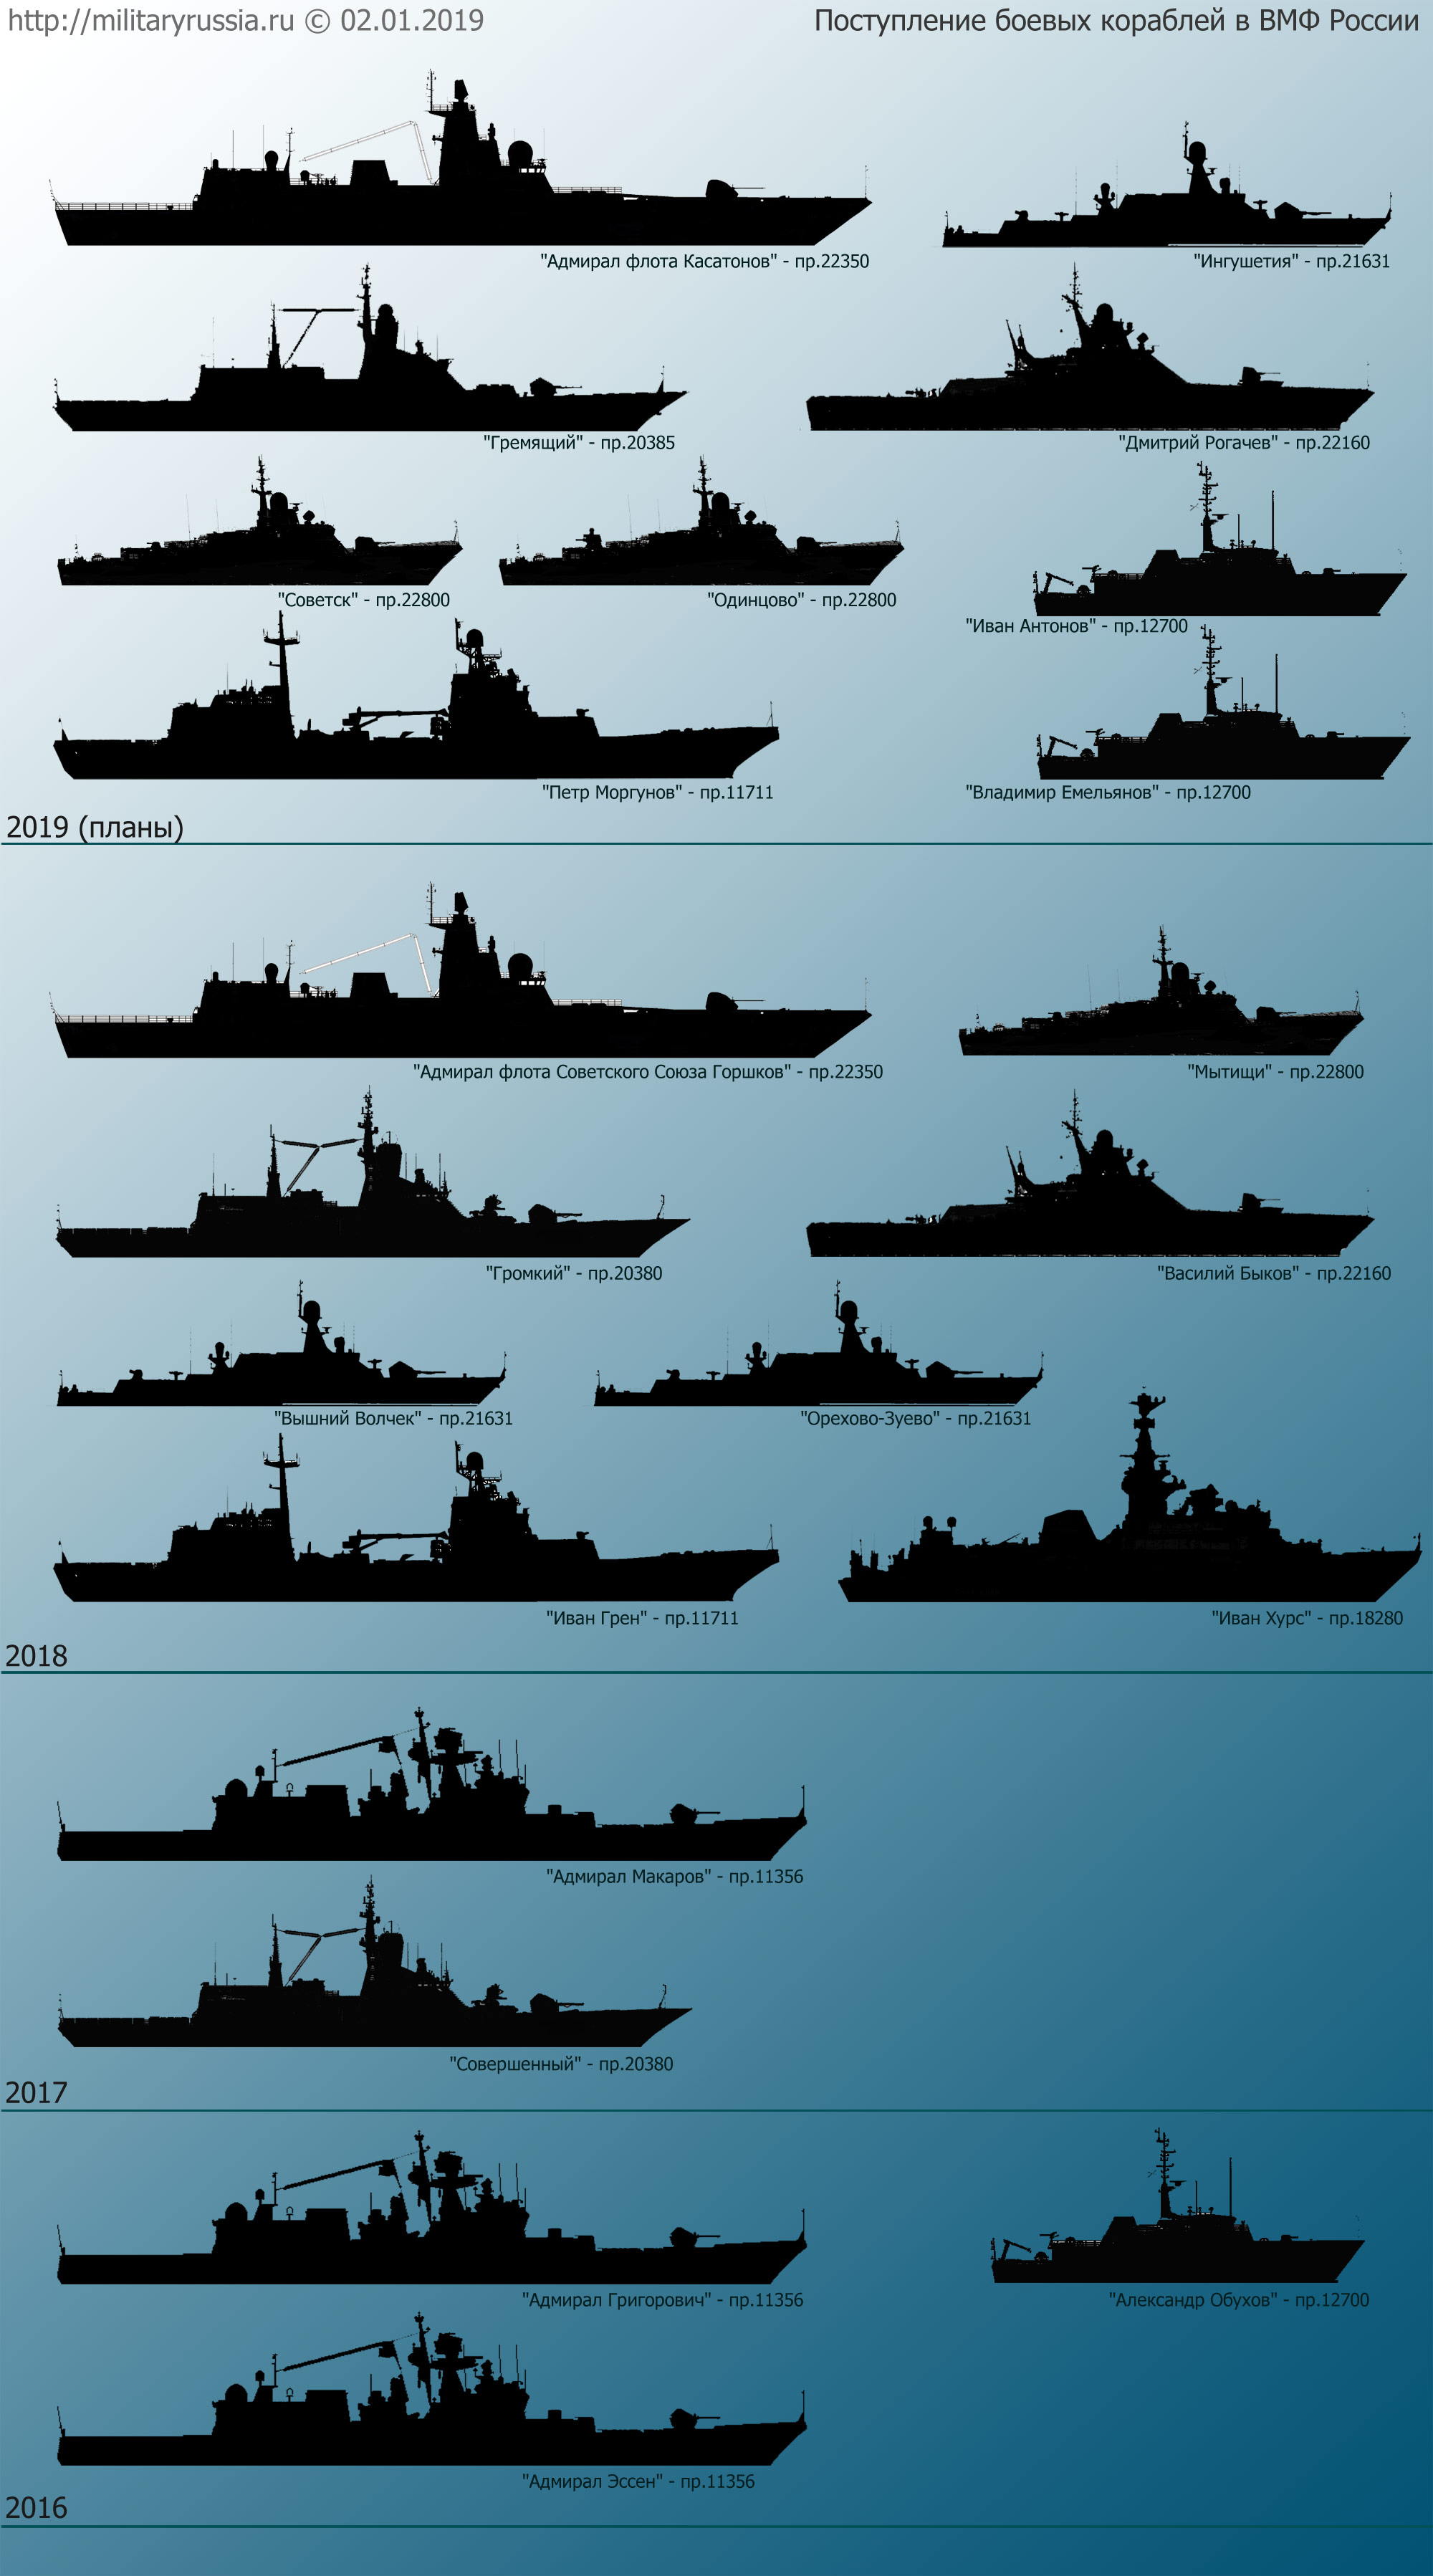 Russian surface warship construction